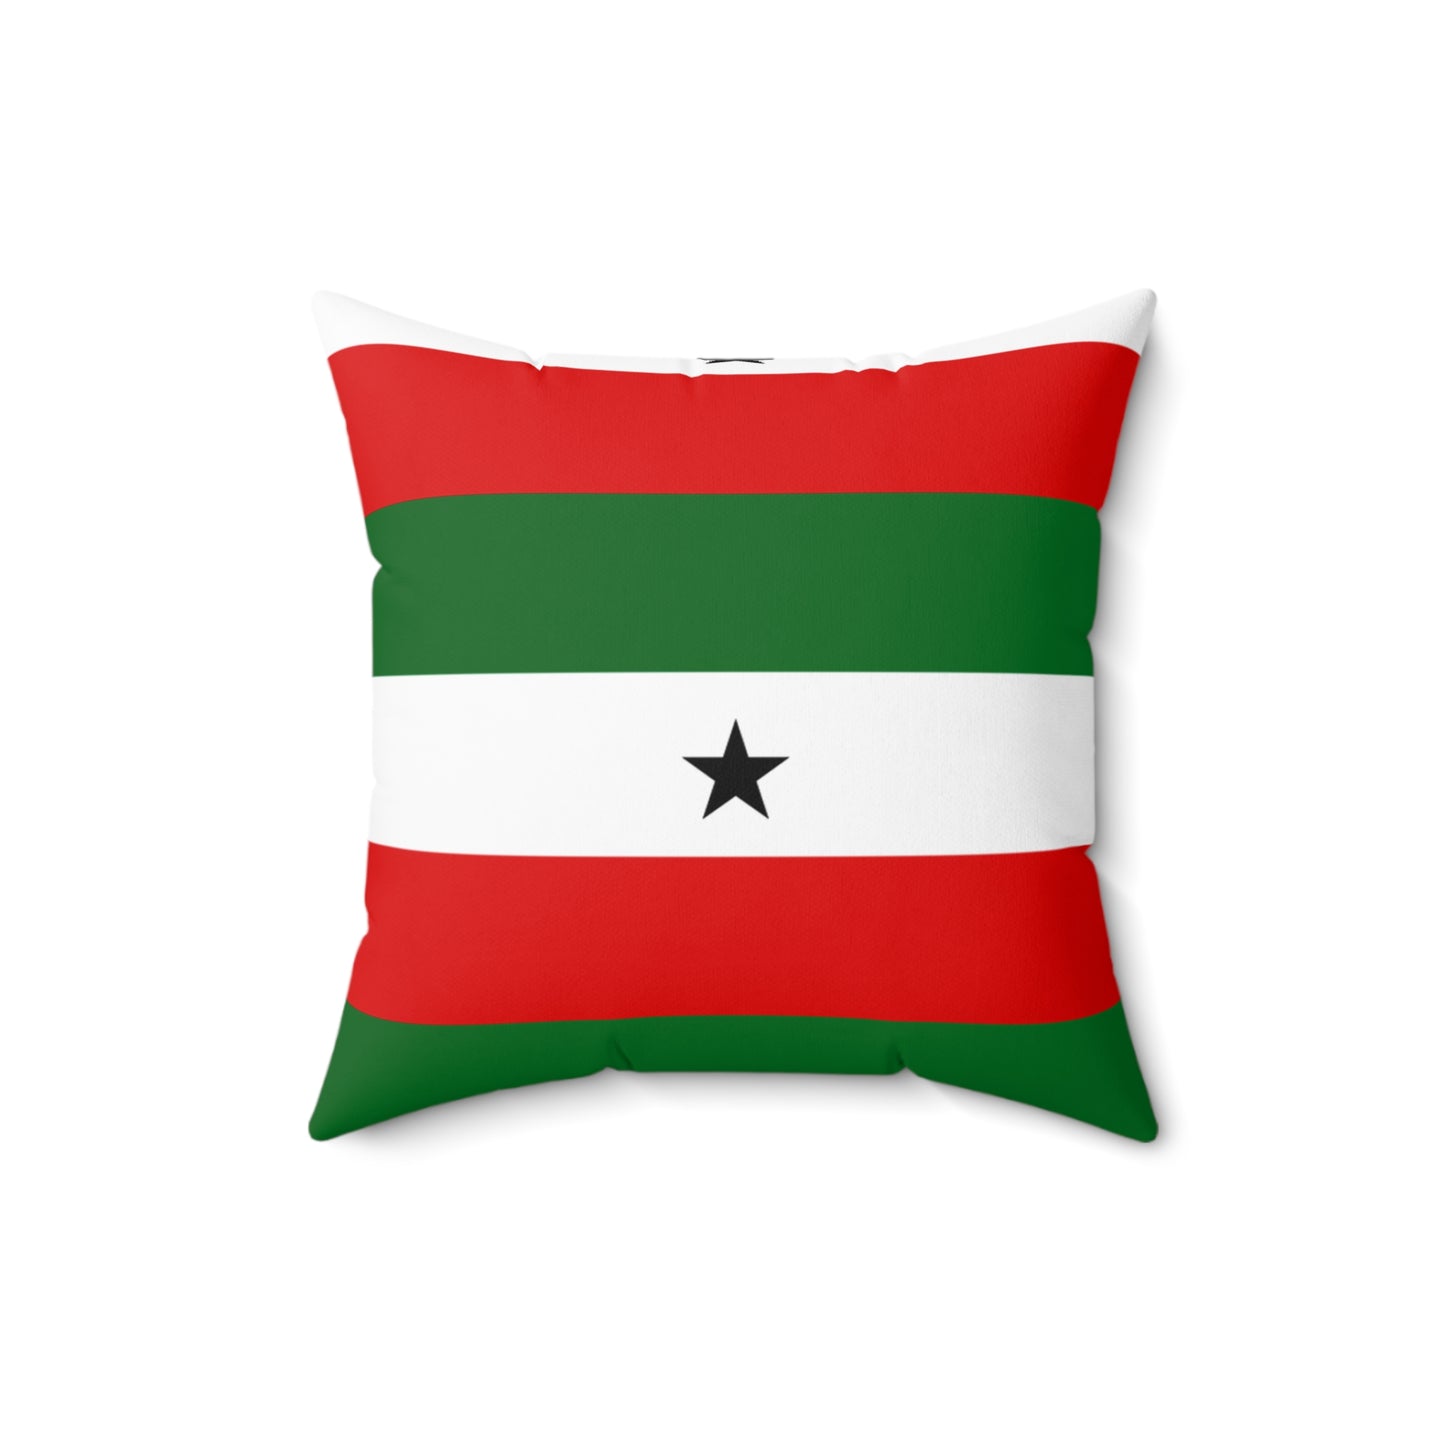 Spun Polyester Square Pillow - Somaliland Flag